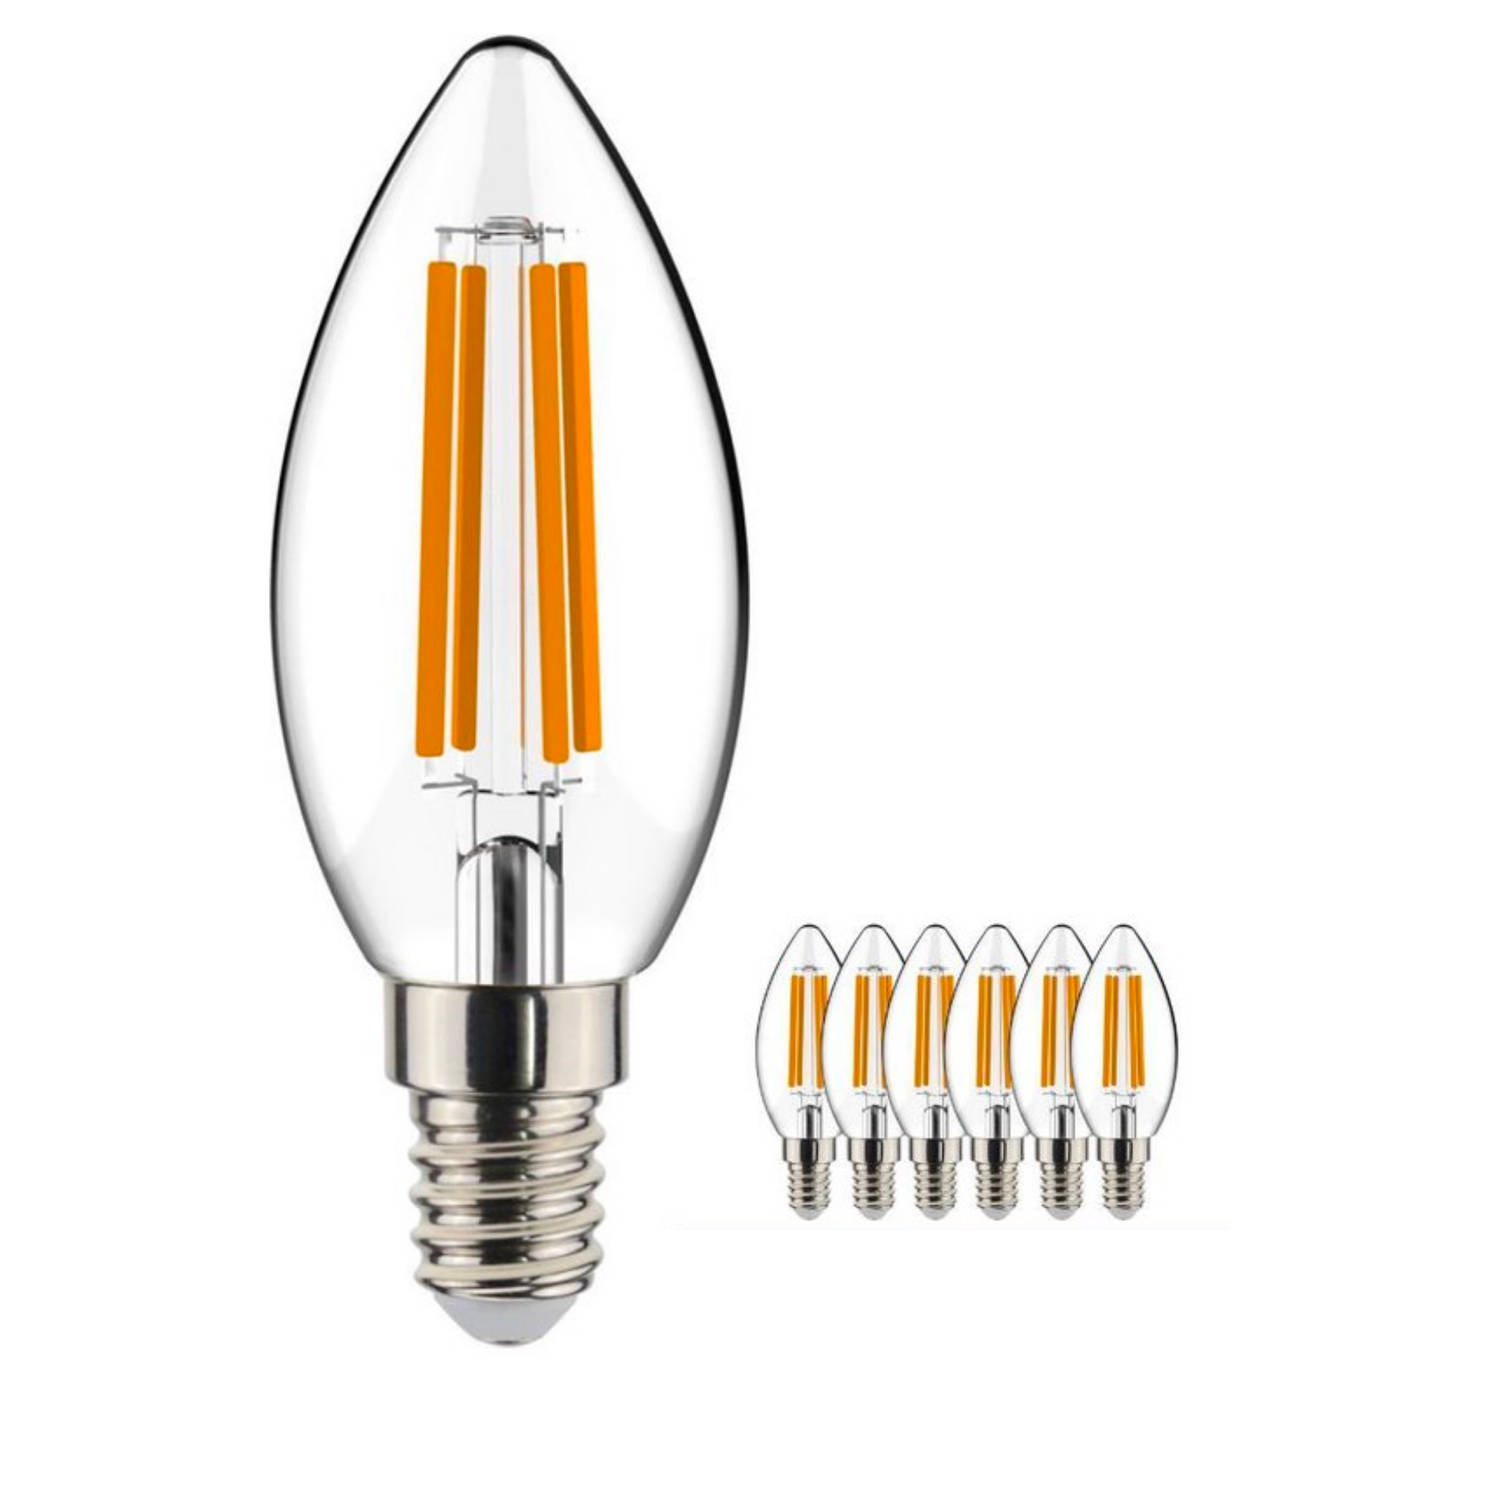 Proventa Krachtige LED Filament lamp met kleine E14 fitting - Voordeelverpakking - 6 x LED kaarslamp |